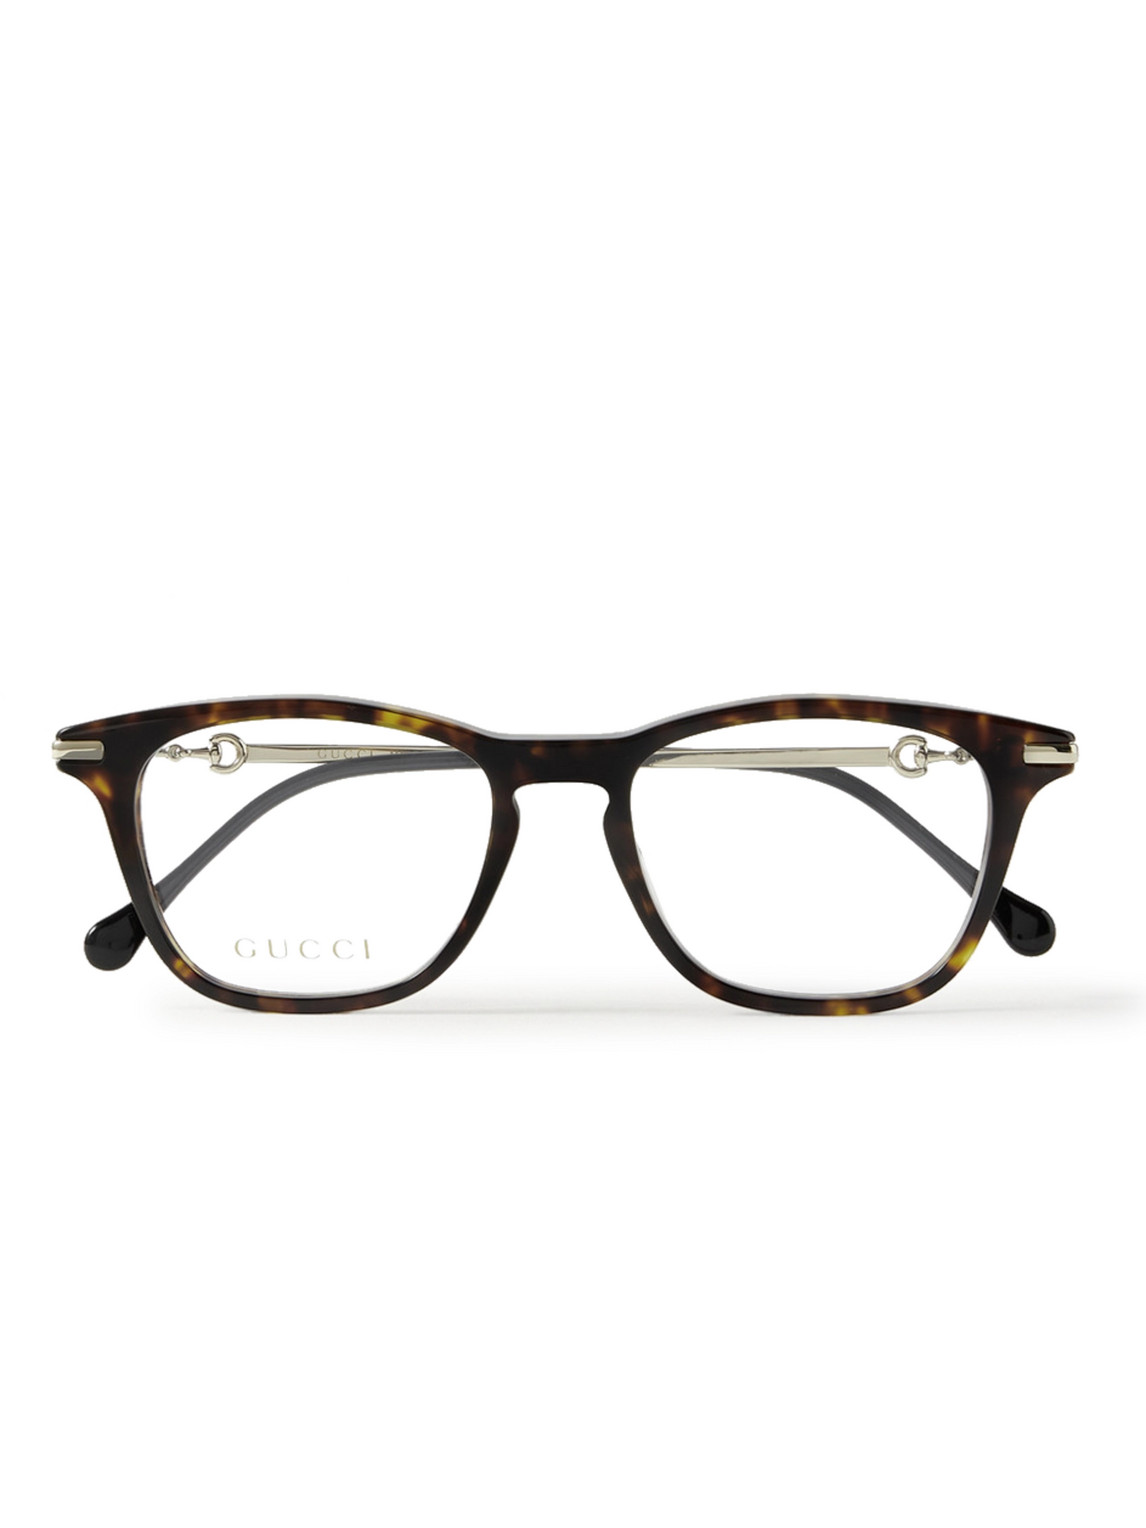 Gucci Square-frame Tortoiseshell Acetate And Gold-tone Optical Glasses